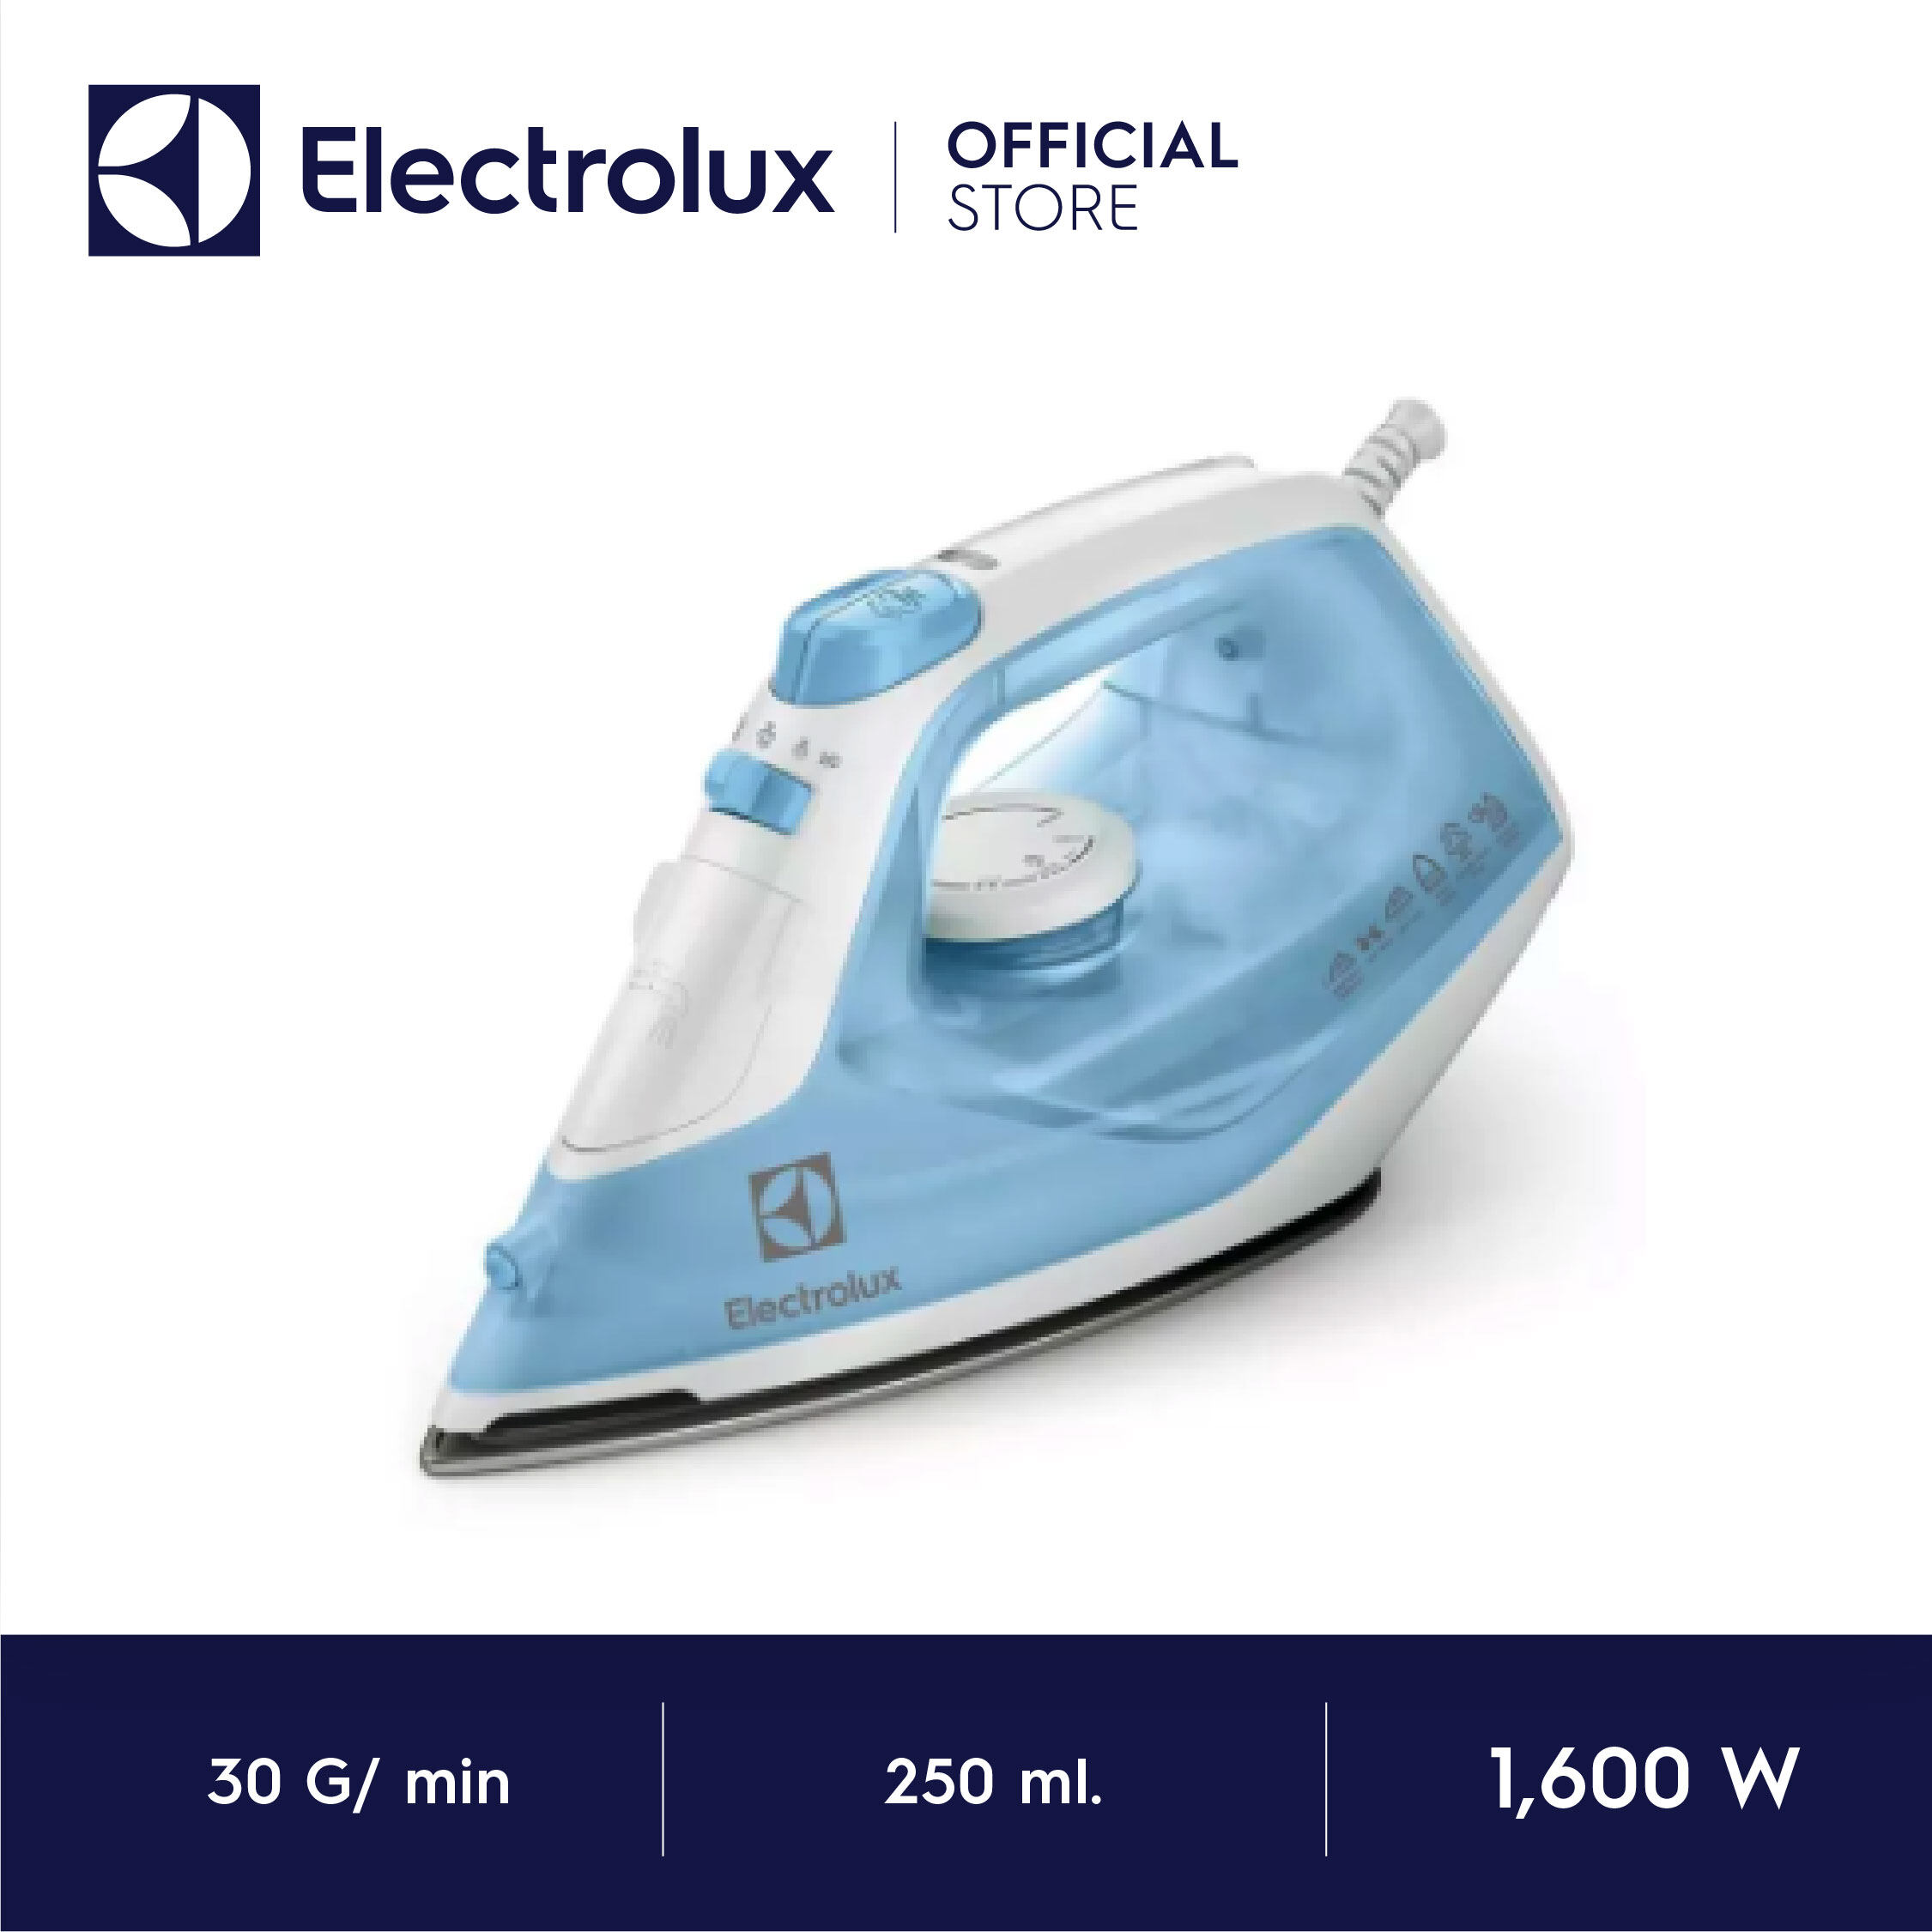 Electrolux เตารีดไอน้ำ รุ่น ESI4017 กำลังไฟ 1600 วัตต์  (สีขาว ฟ้า)